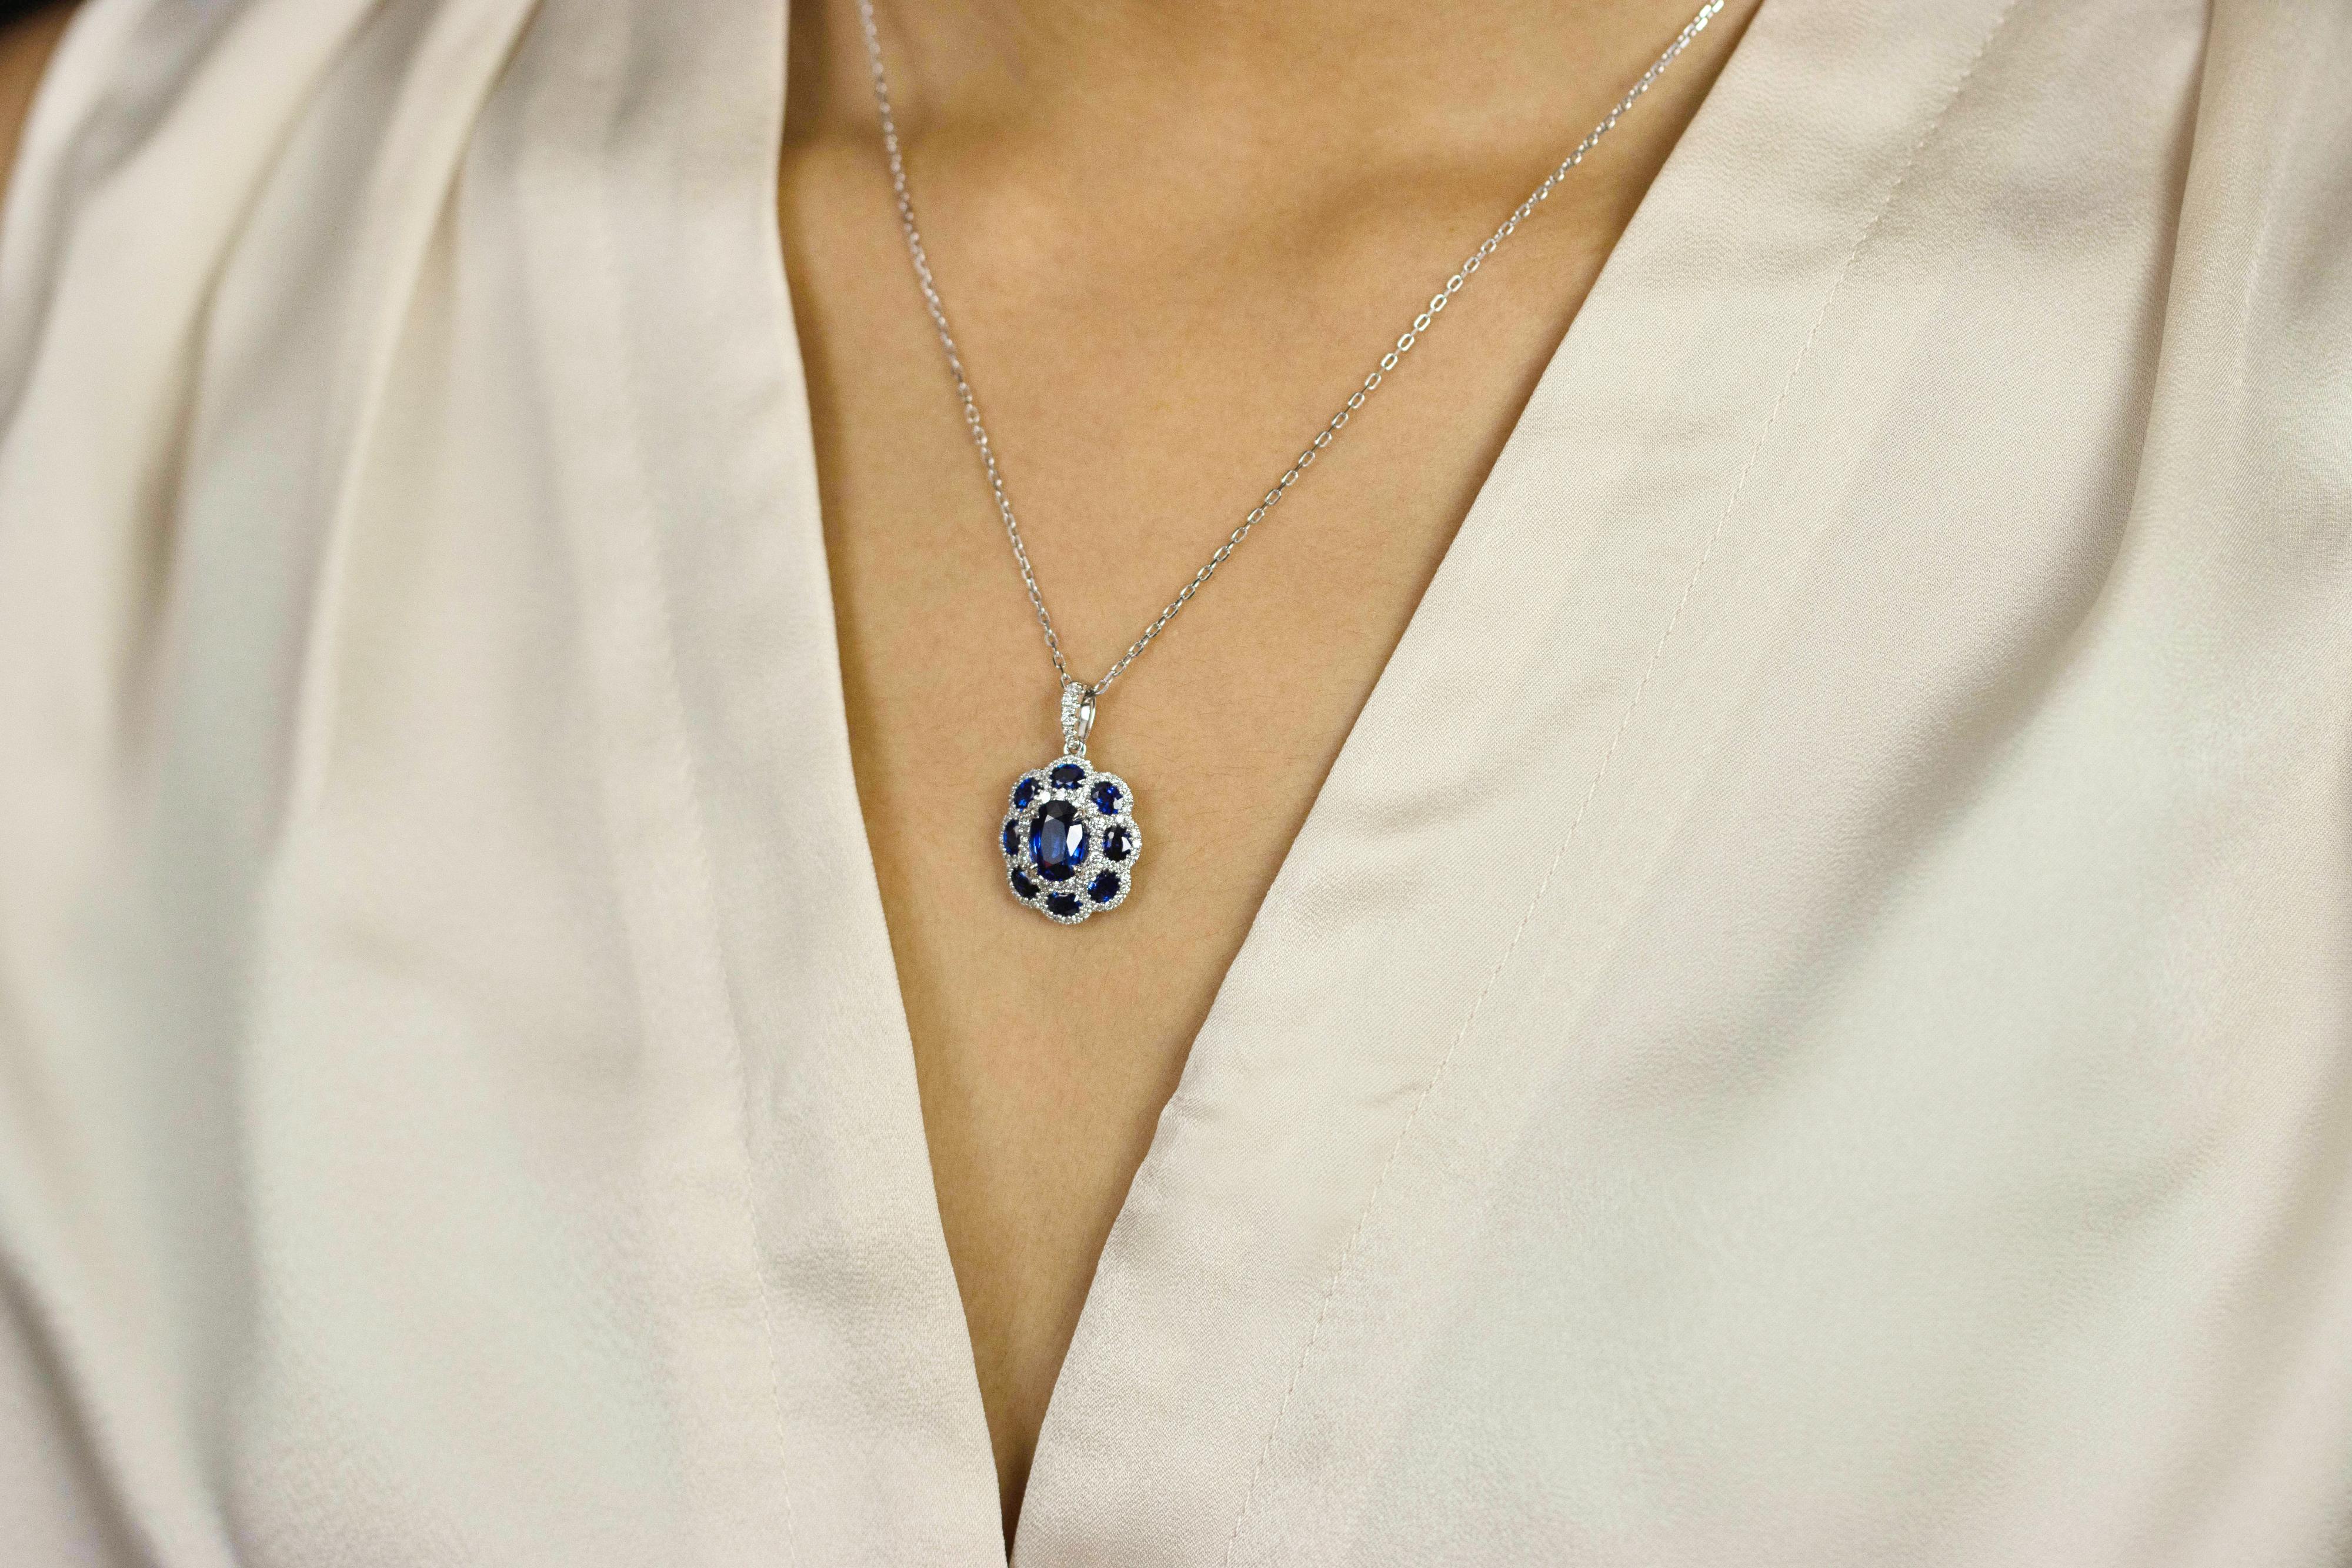 Roman Malakov 3.88 Carats Oval Cut Blue Sapphire and Diamond Pendant Necklace For Sale 1